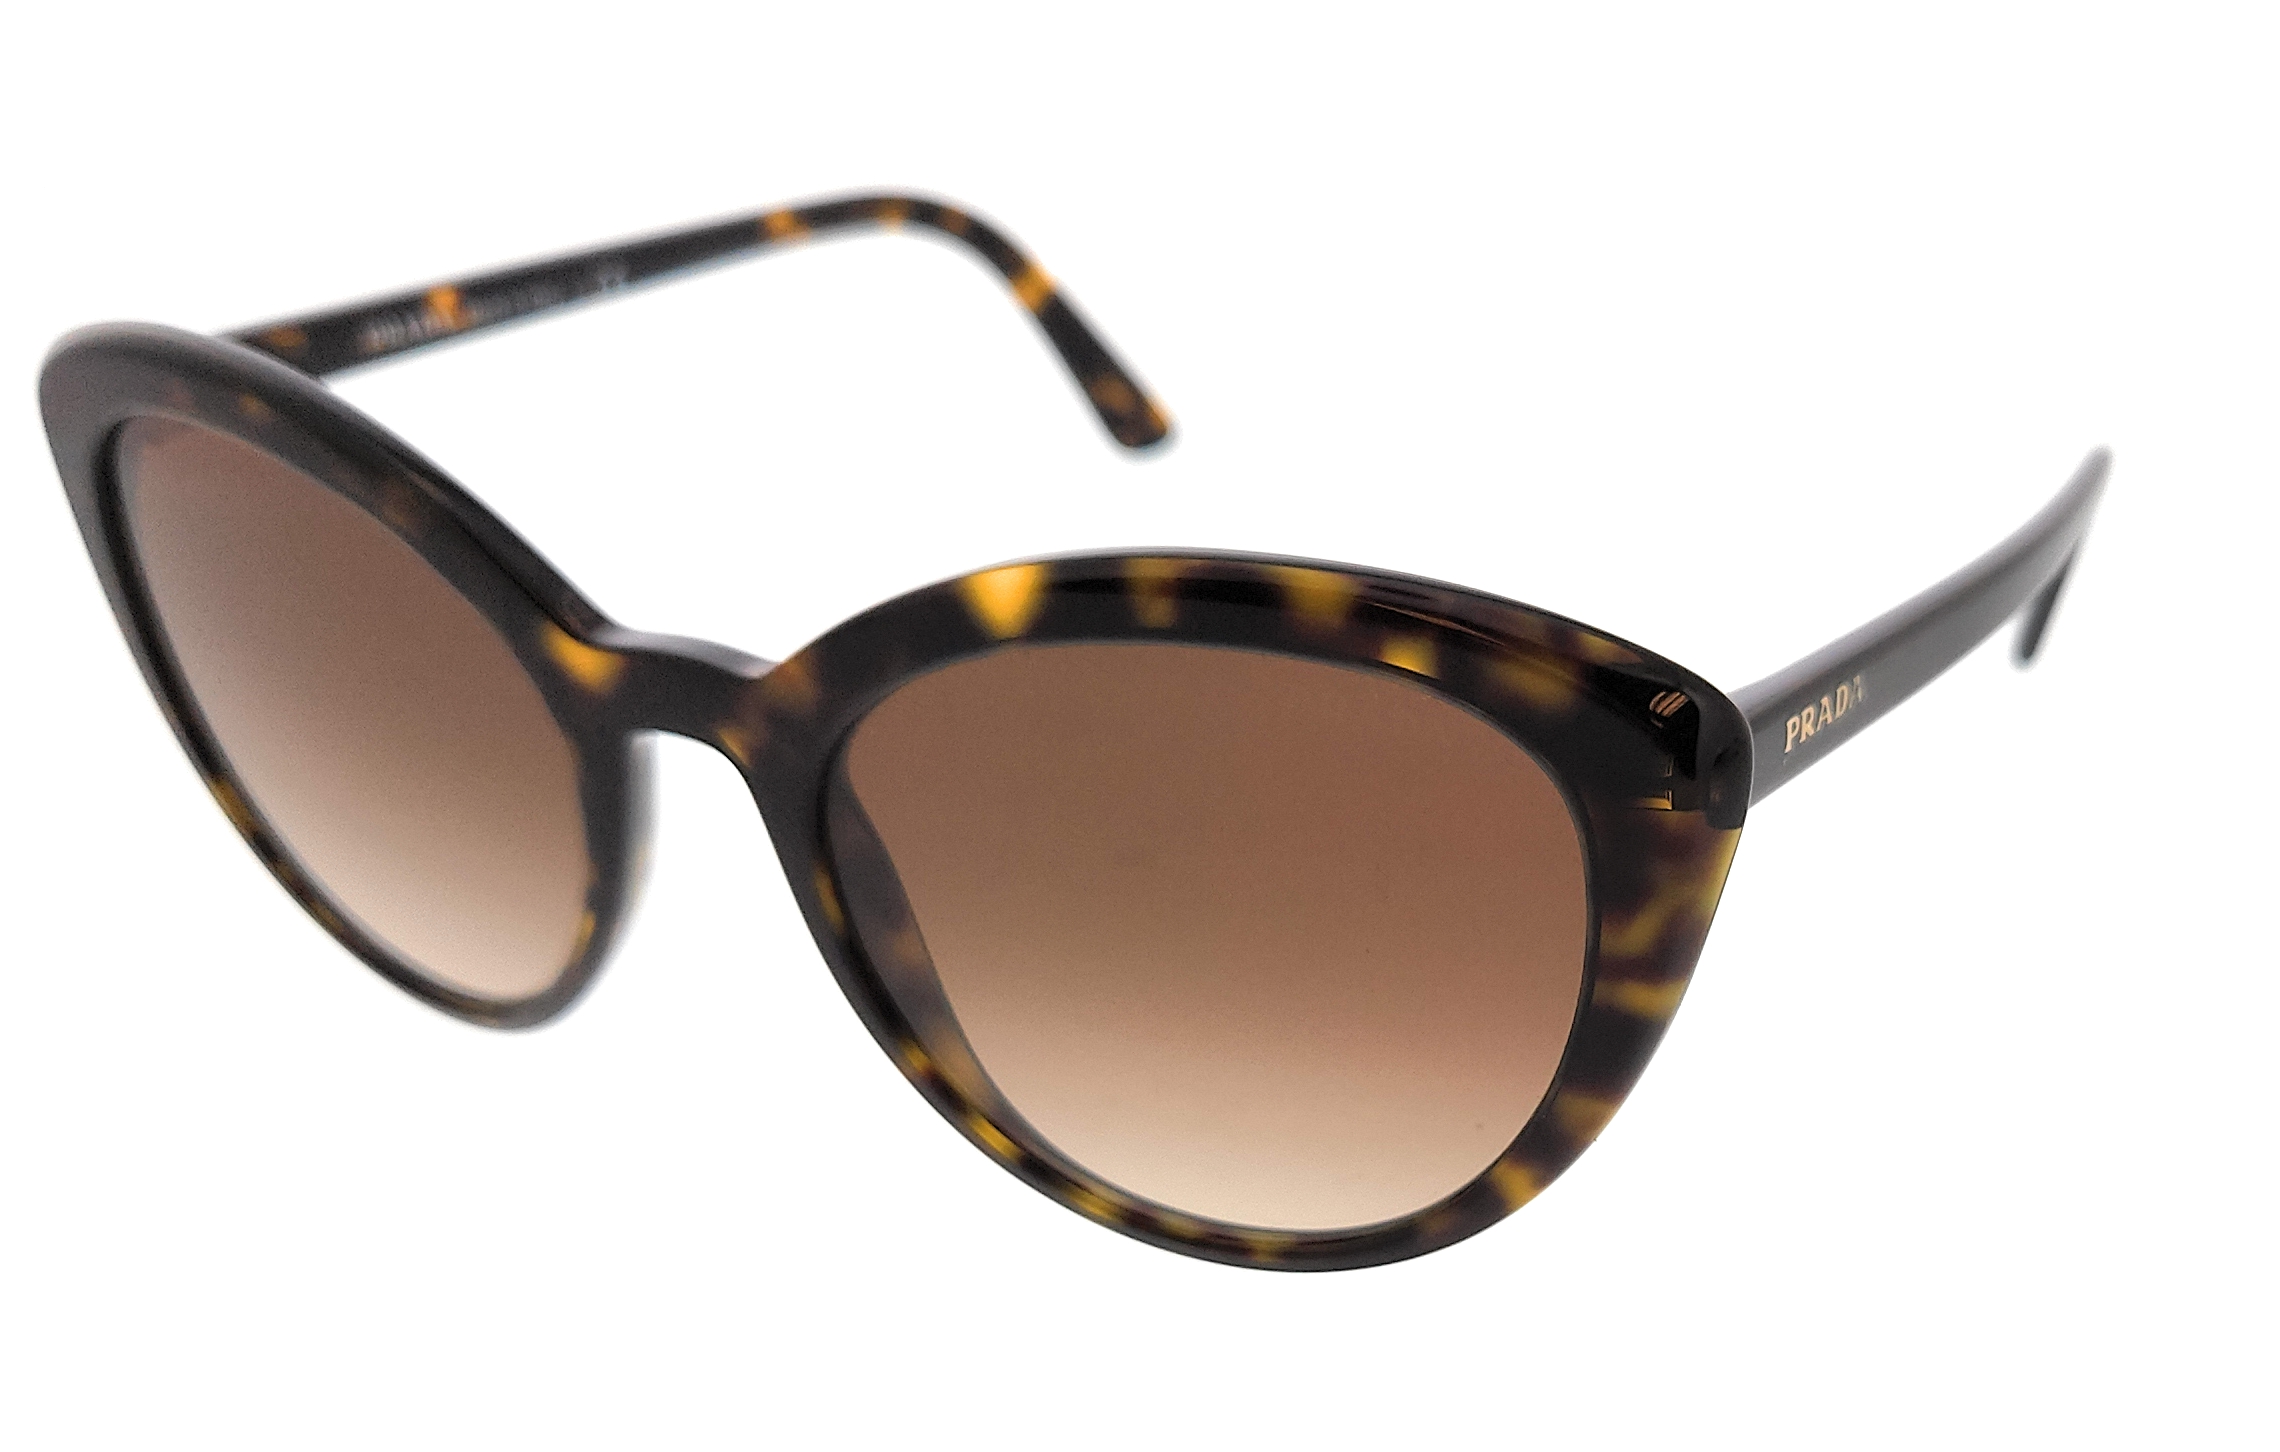 Details more than 141 prada circle sunglasses best